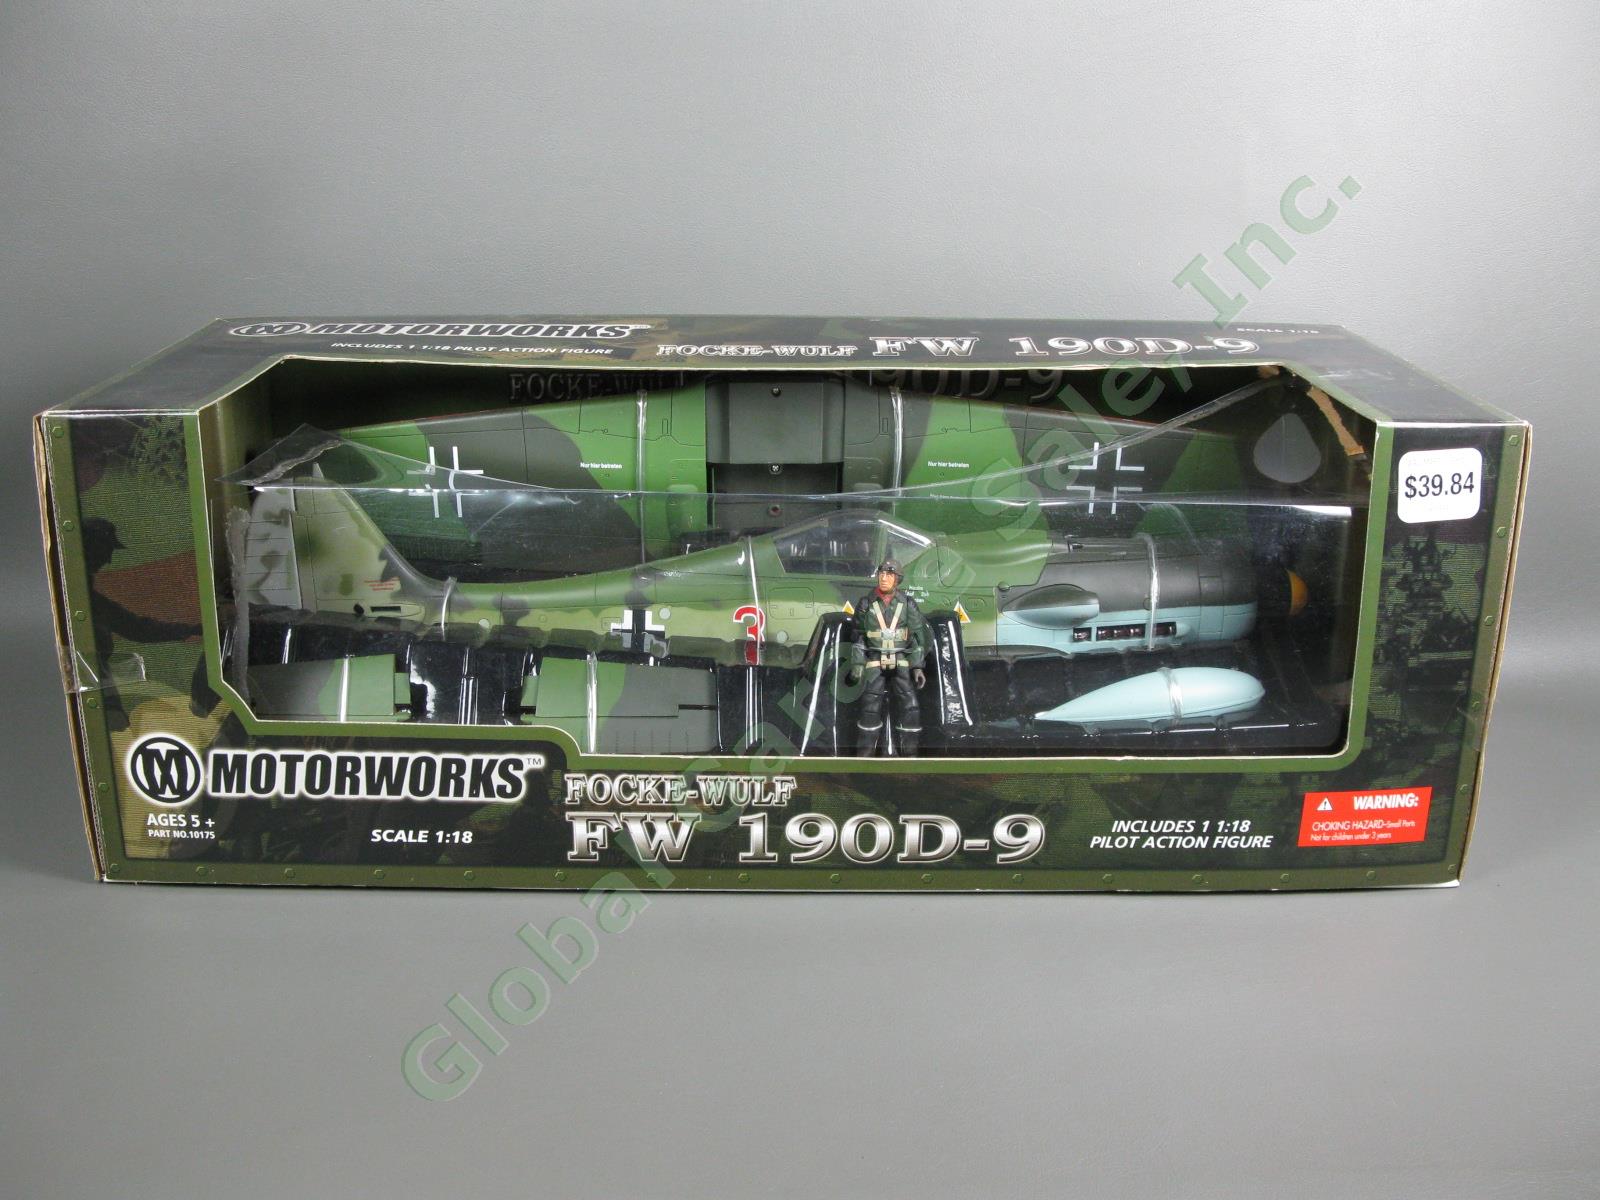 21st Century Toys Motorworks 1/18 WWII German Focke-Wulf FW 190D-9 Toy Plane NR